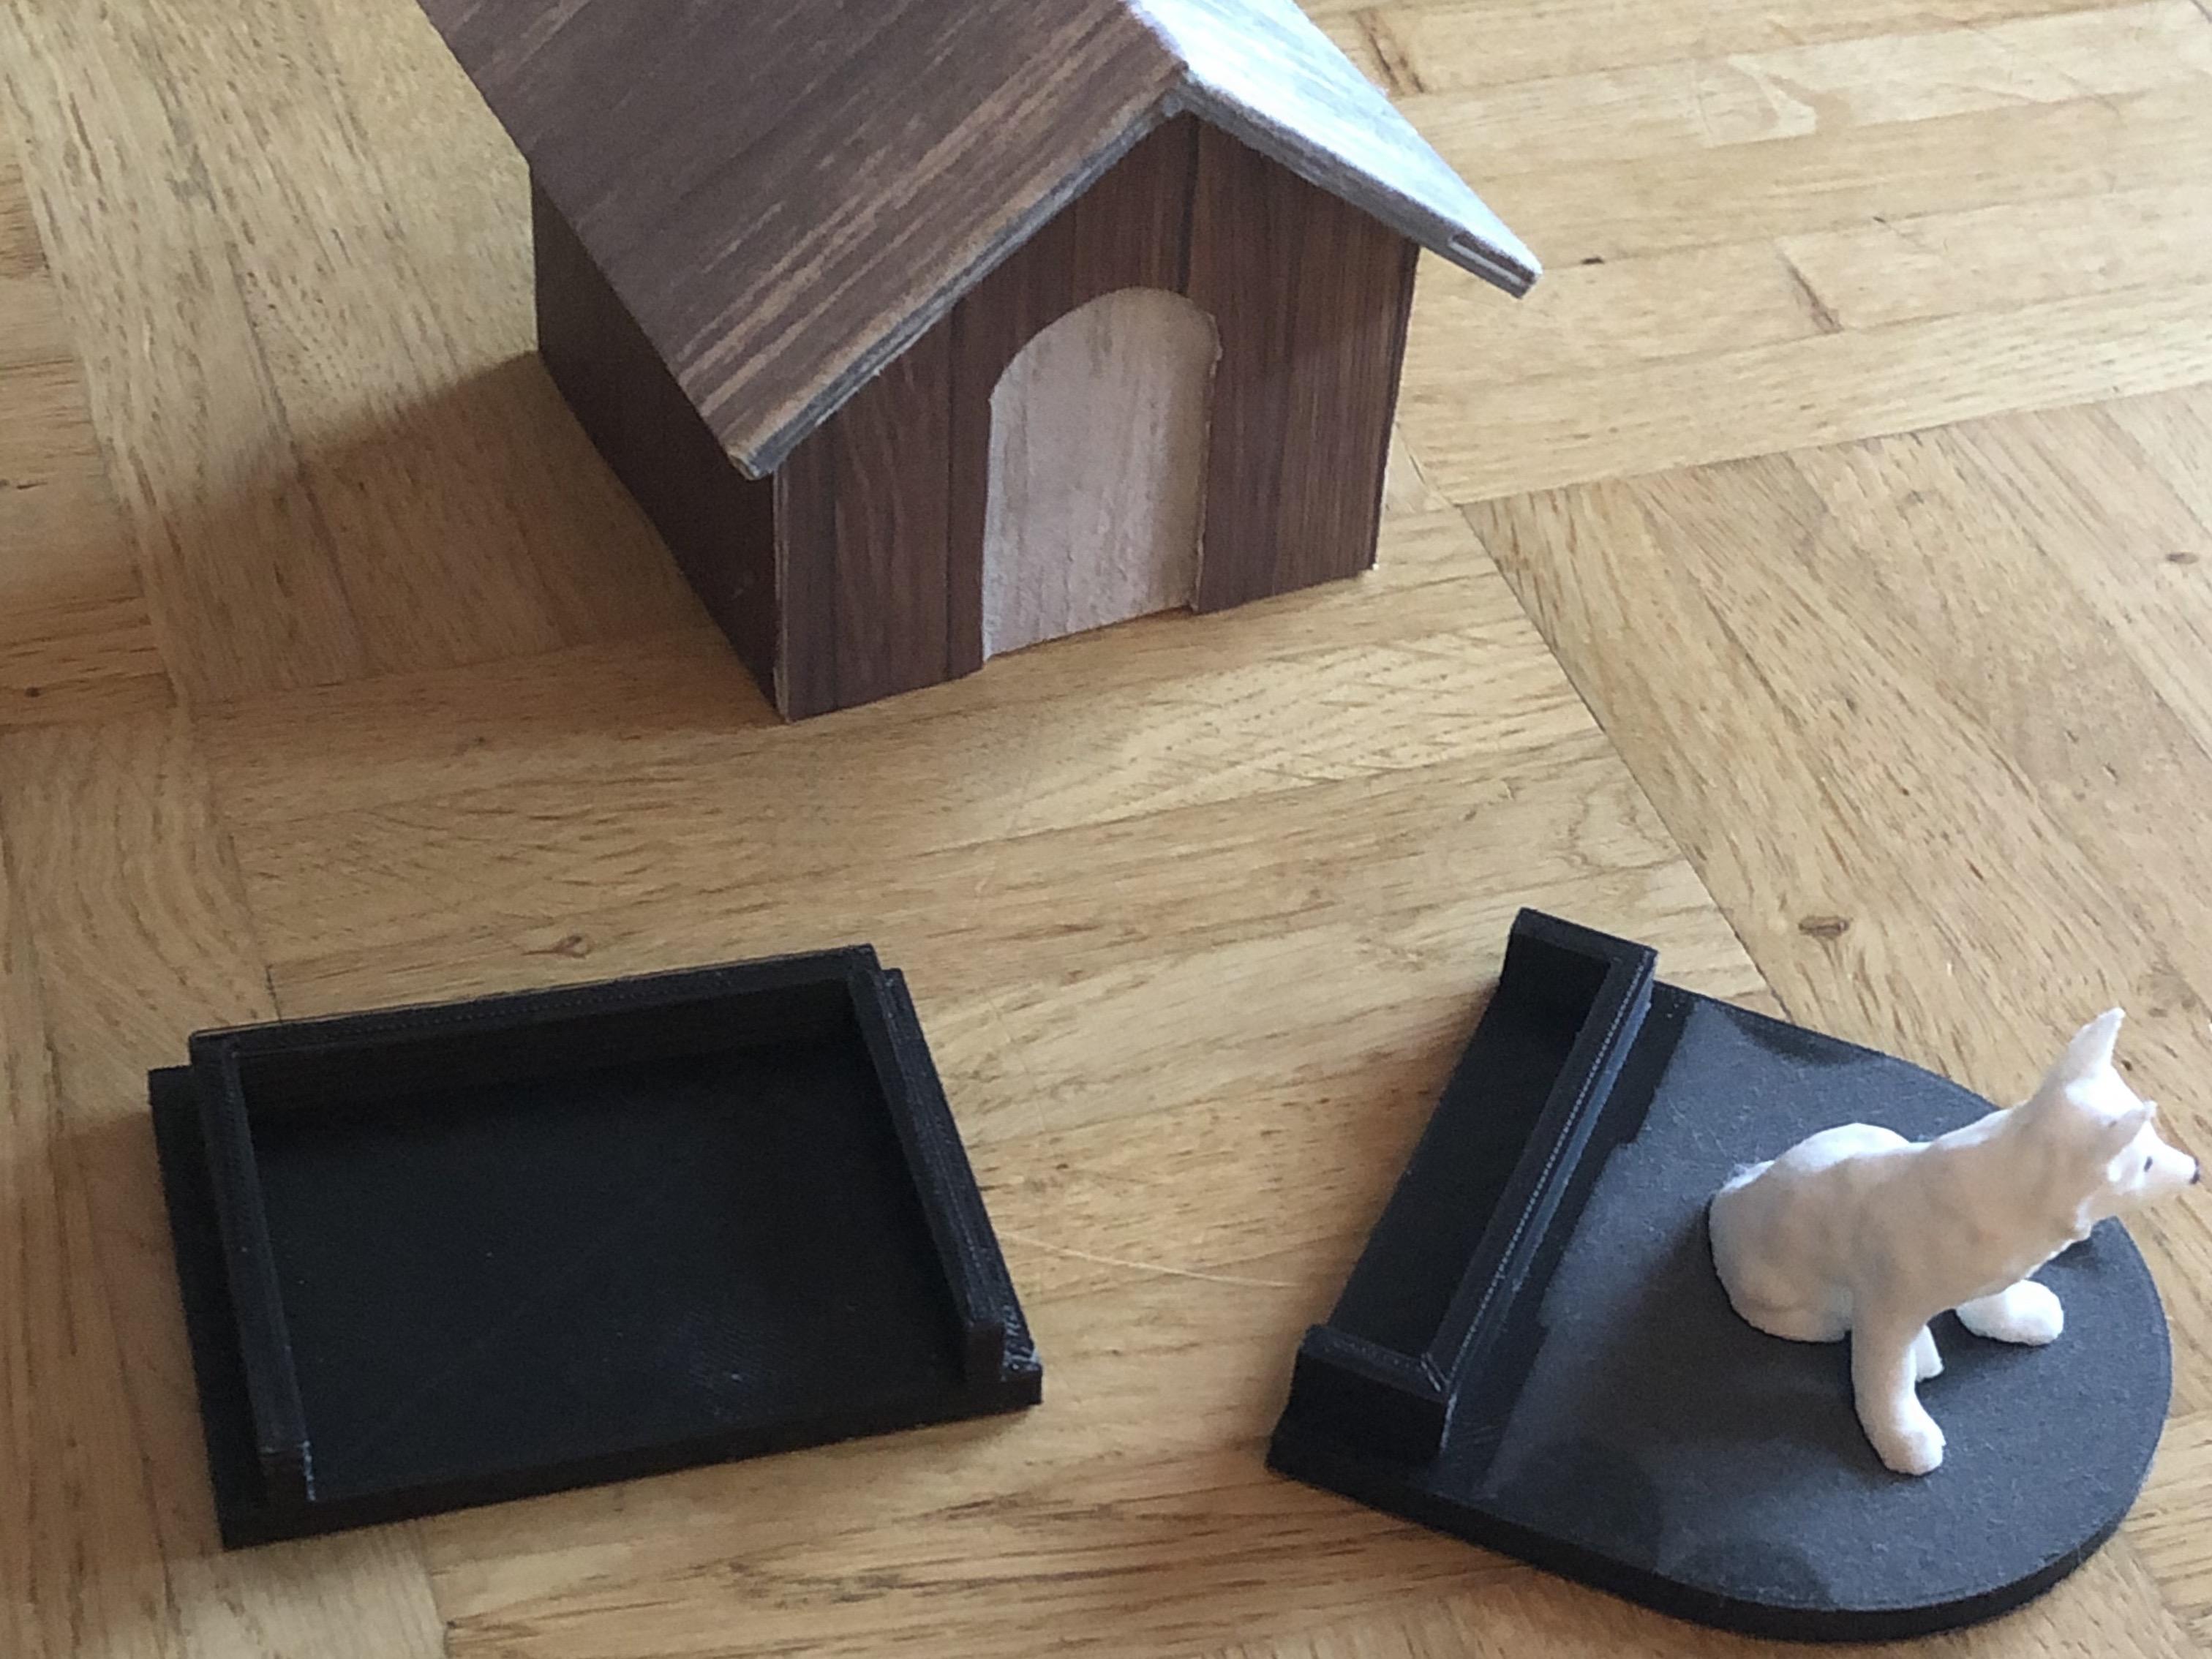 Dog house money box 3d model